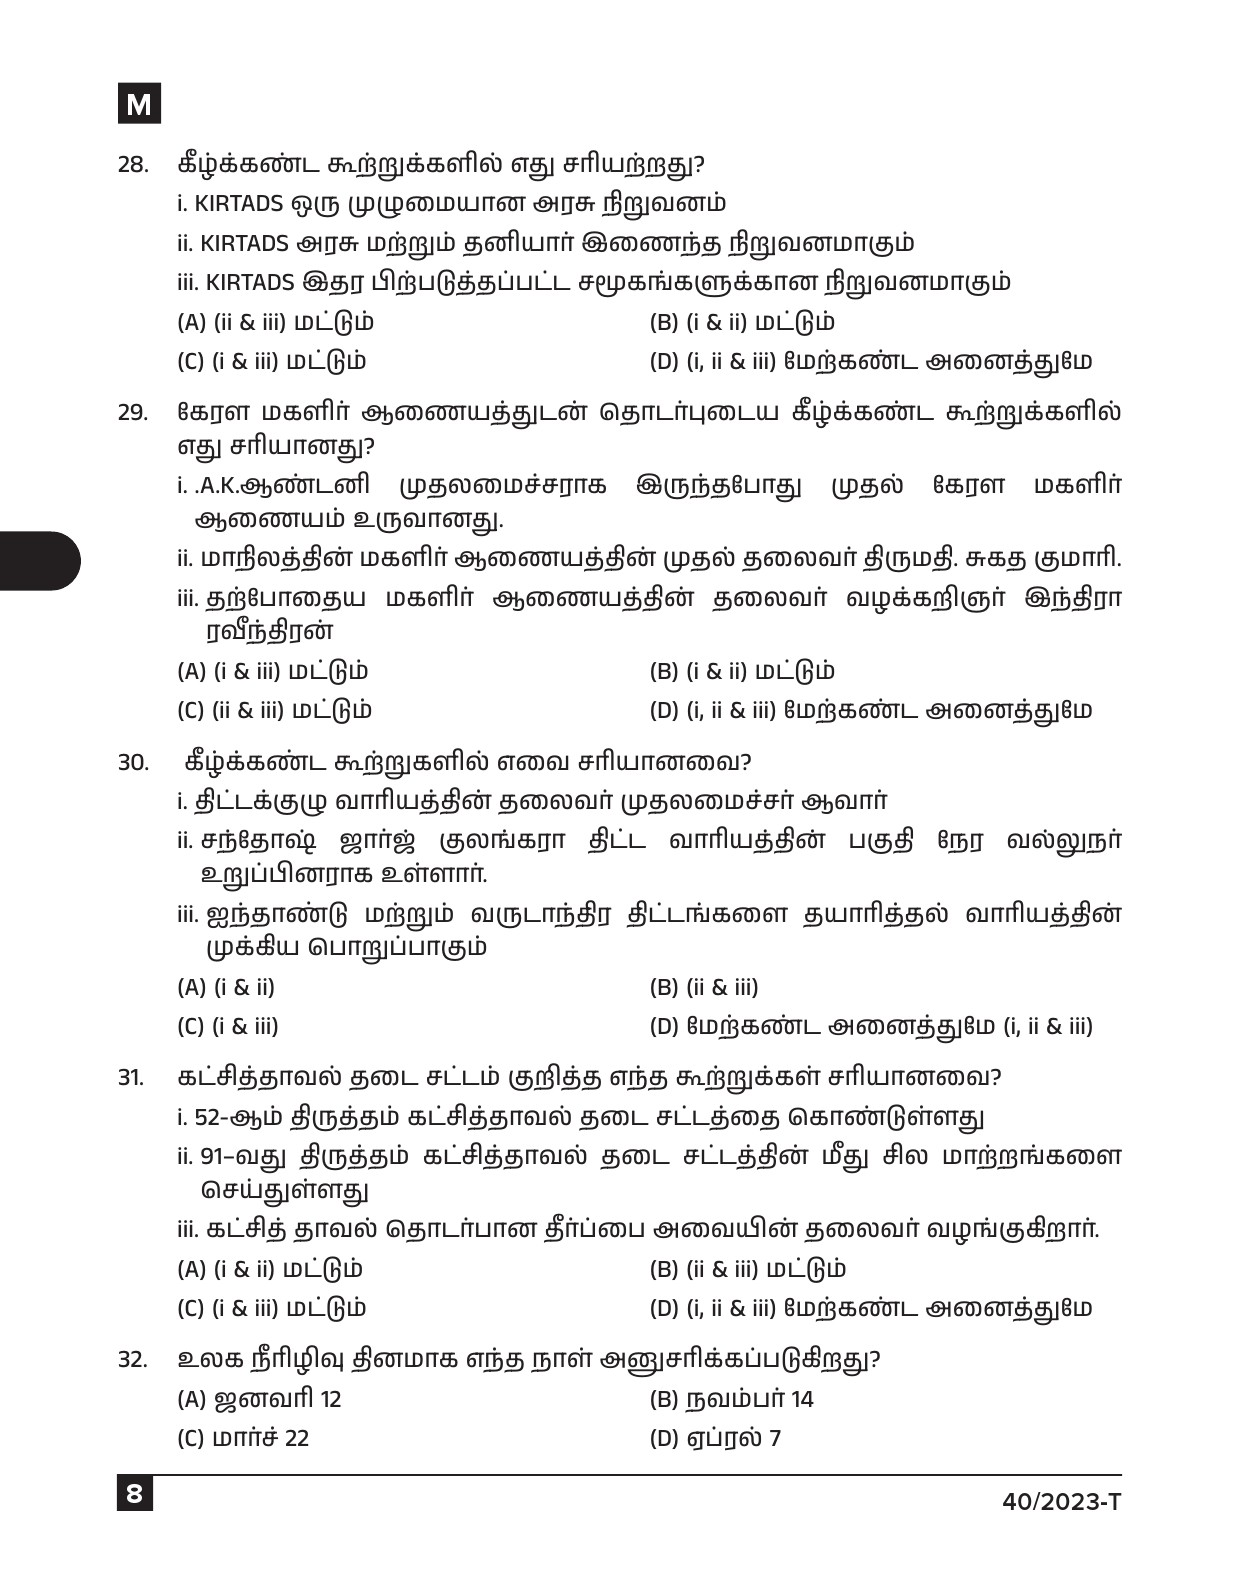 KPSC Data Entry Operator Tamil Exam 2023 Code 0402023 T 7